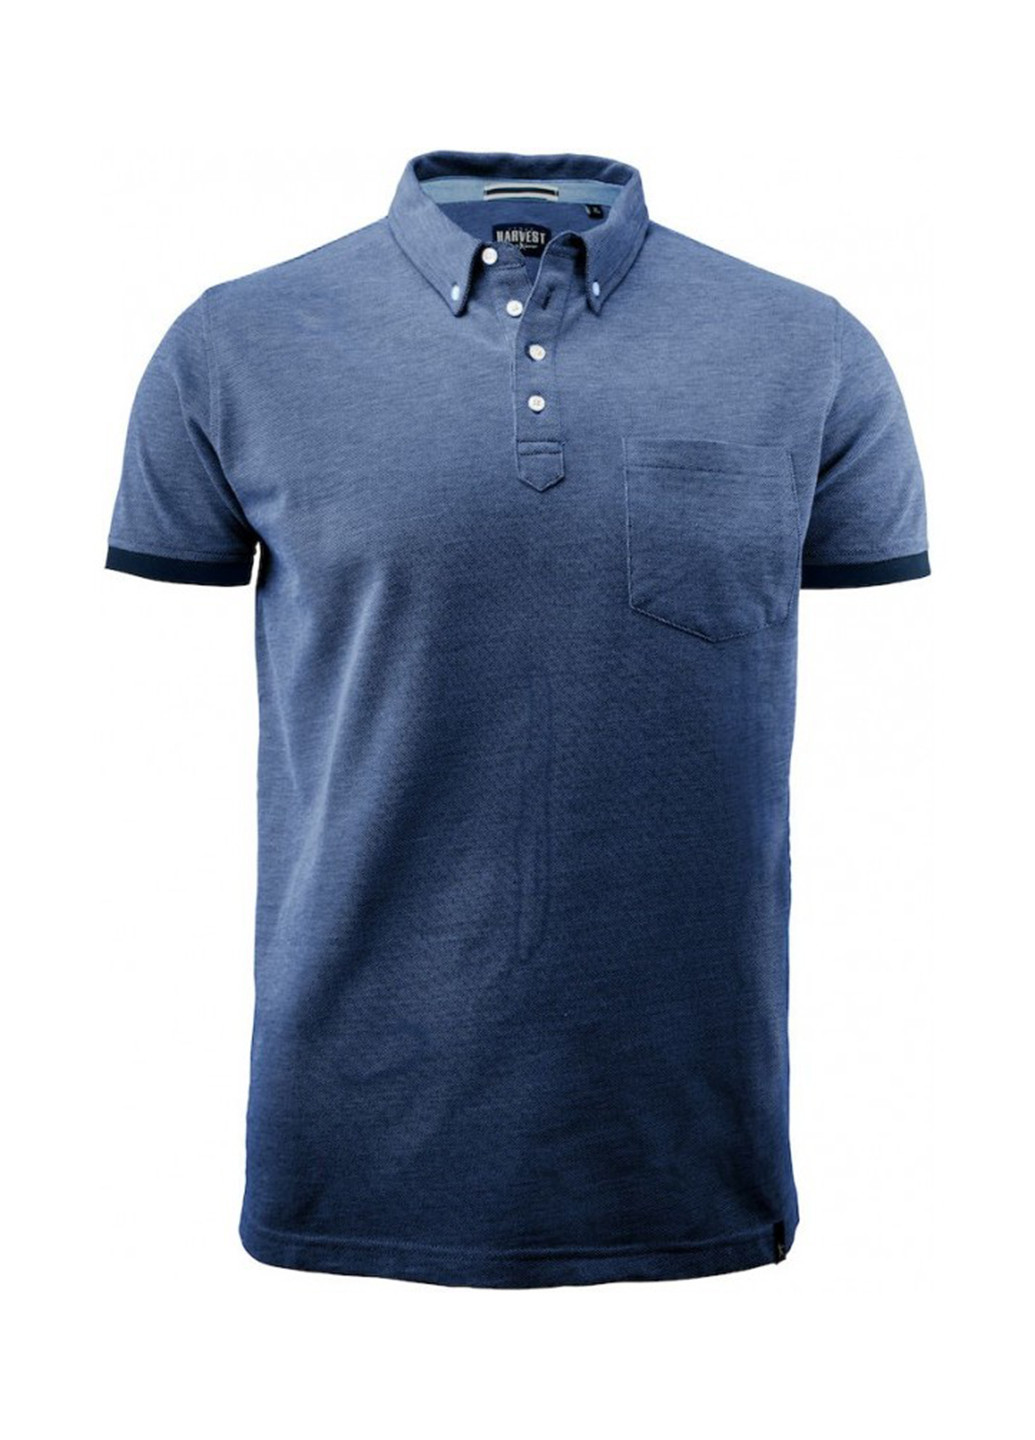 Темно-синяя футболка-поло для мужчин James Harvest градиентная ("омбре")